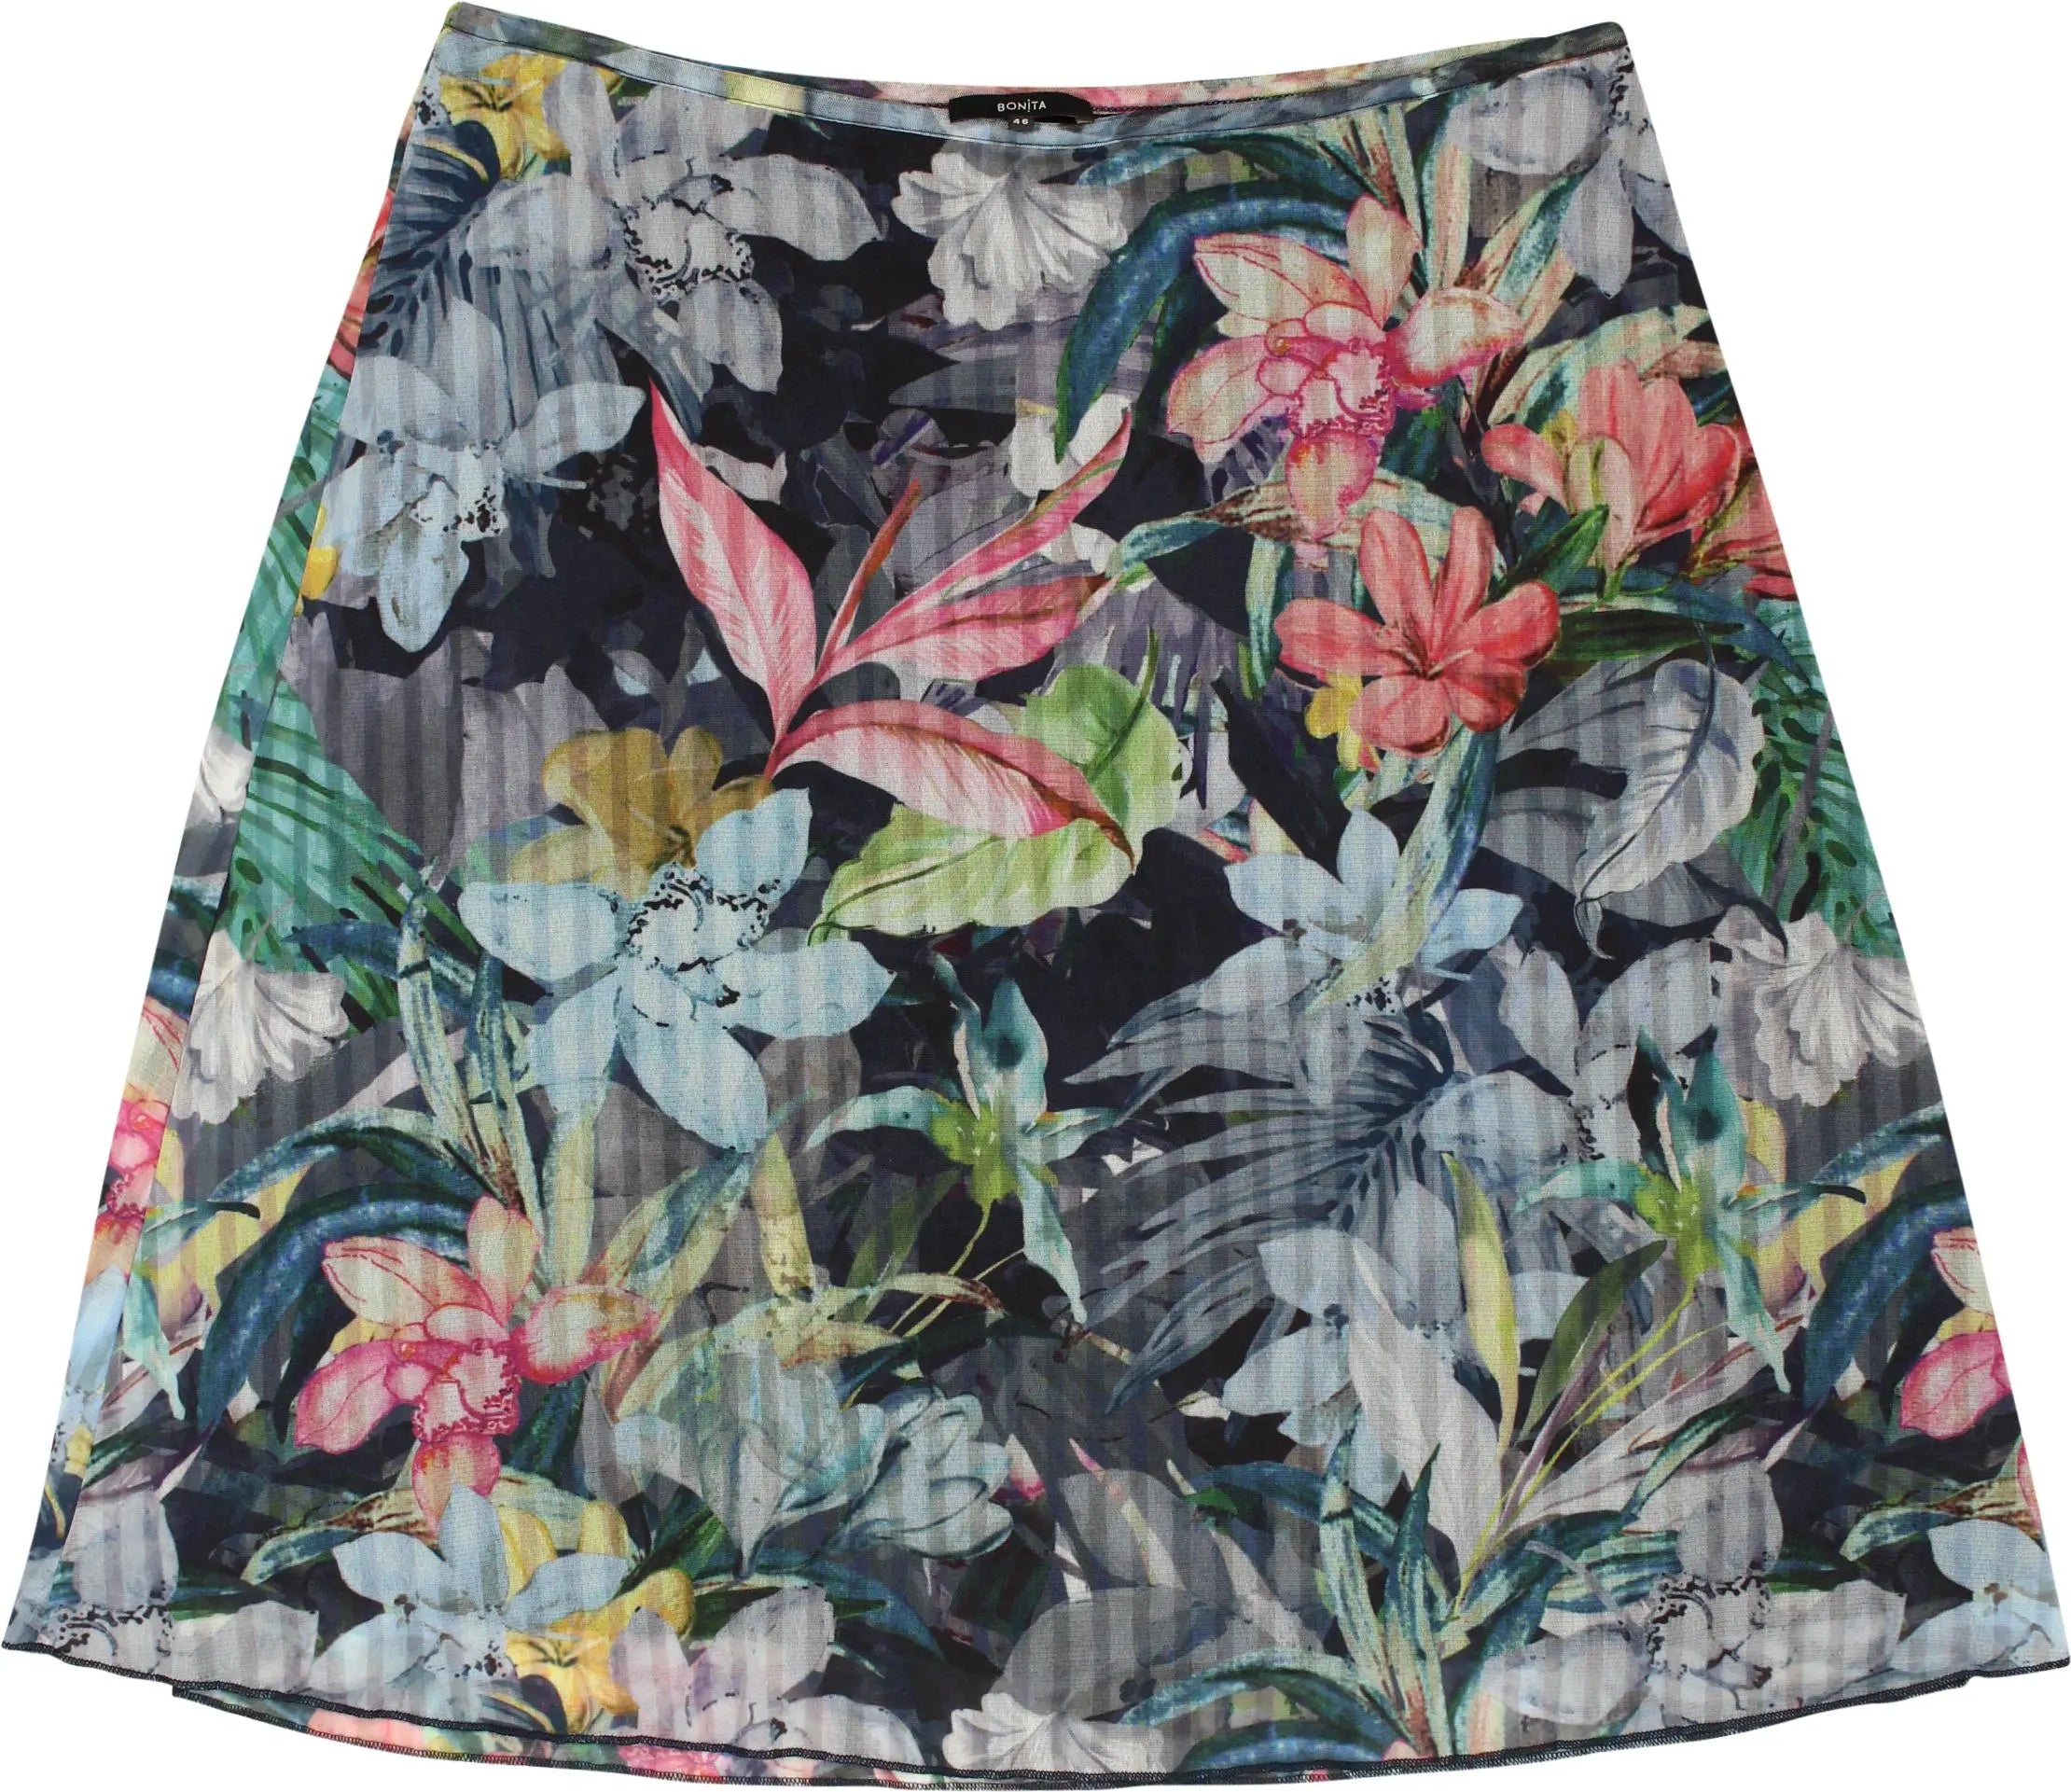 Bonita - Skirt- ThriftTale.com - Vintage and second handclothing